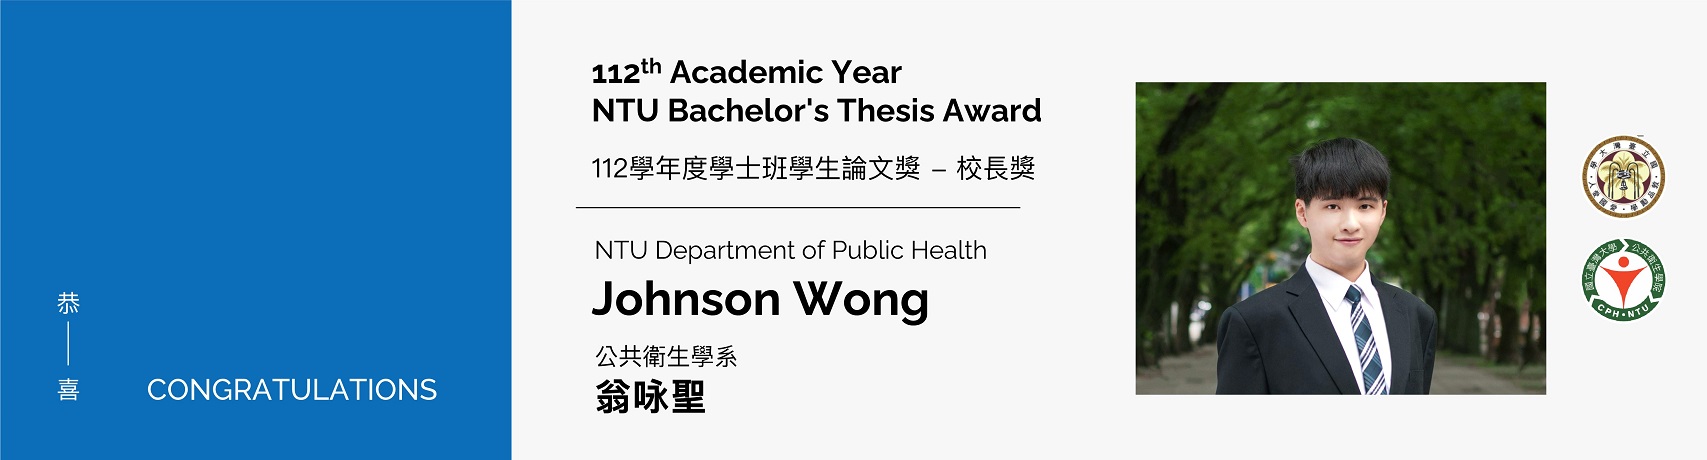 【Congratulations!】DPH student Johnson Wong awarded 112th Academic Year NTU Bachelor's Thesis Award